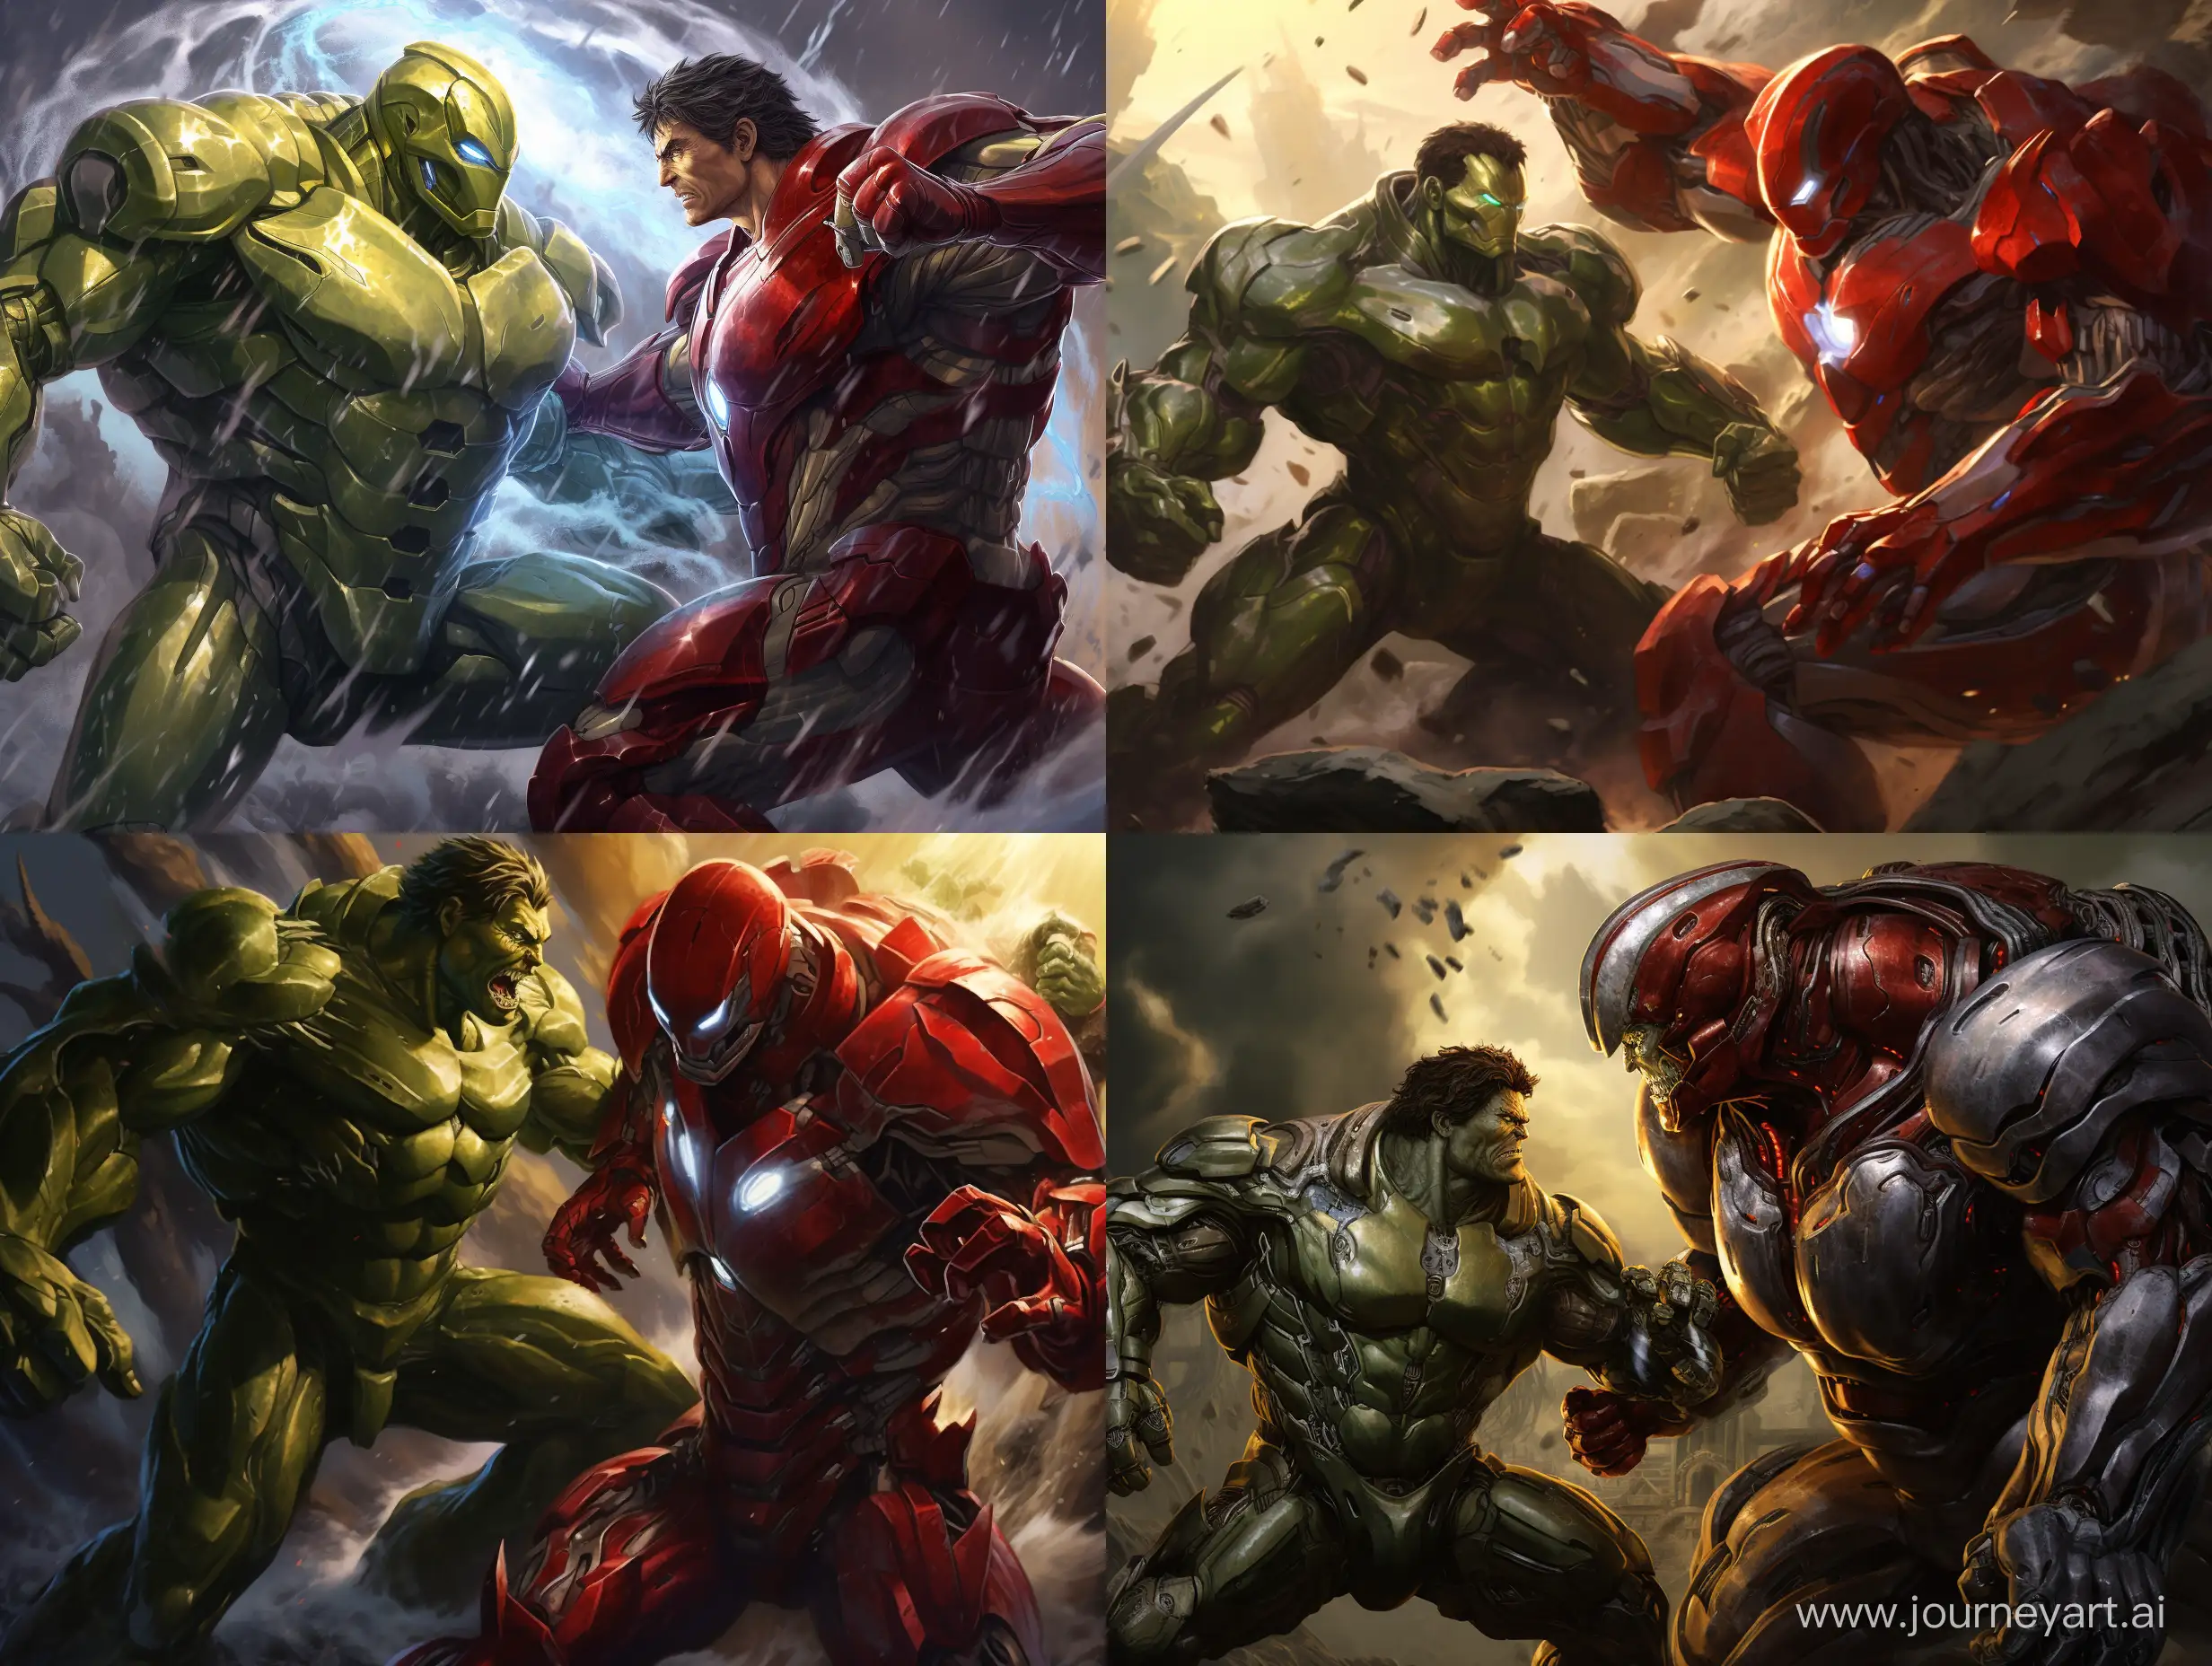 Epic-Battle-Iron-Man-vs-Hulk-in-a-Massive-Armor-Clash